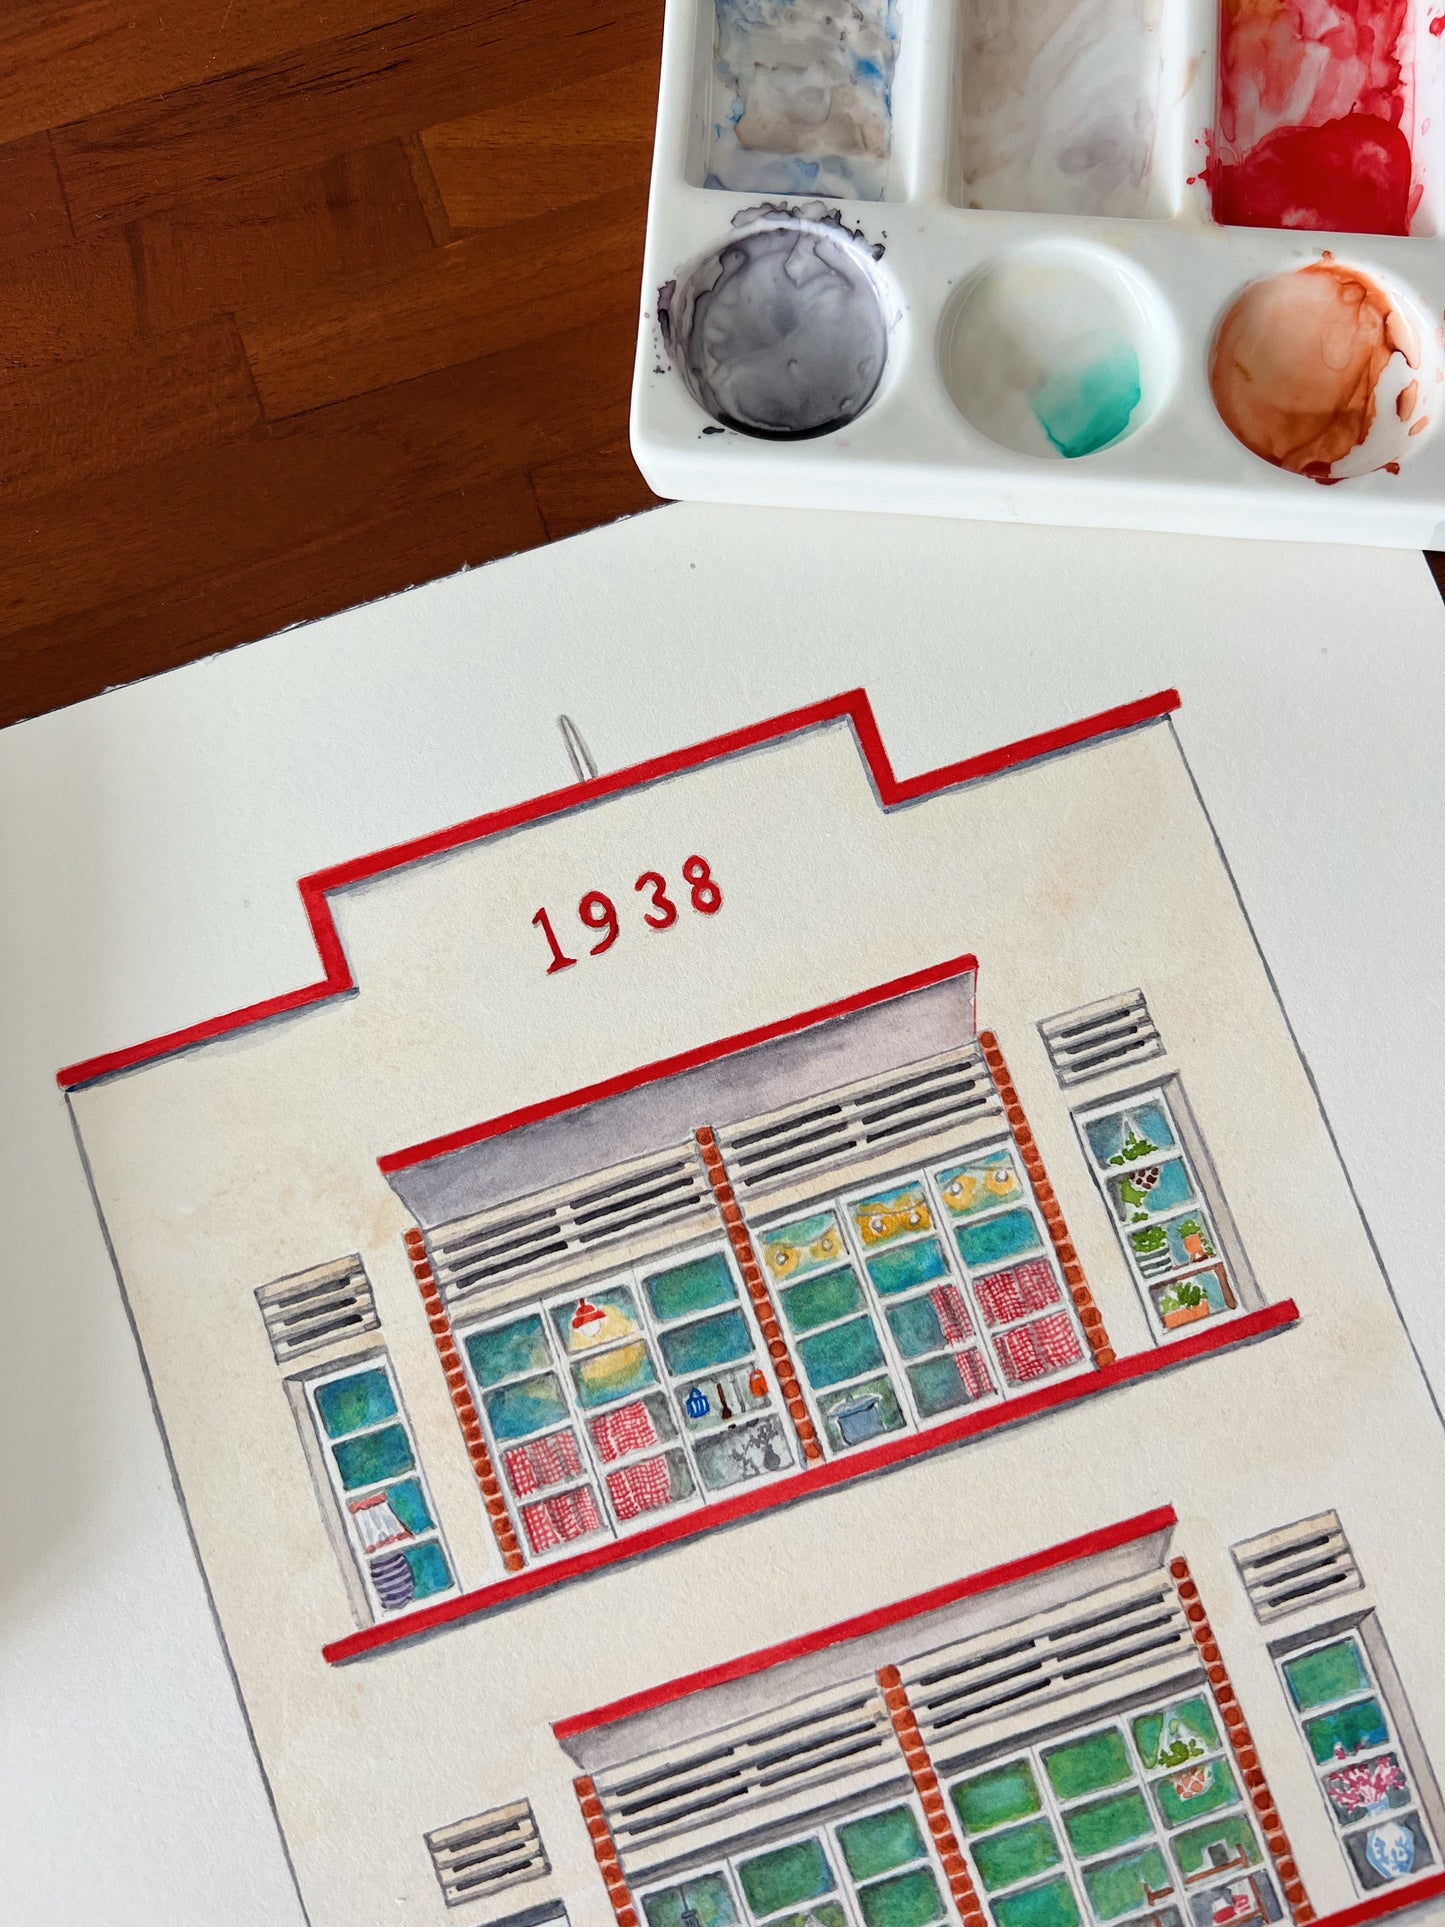 Fine Art Print - Beautiful Life Shophouse